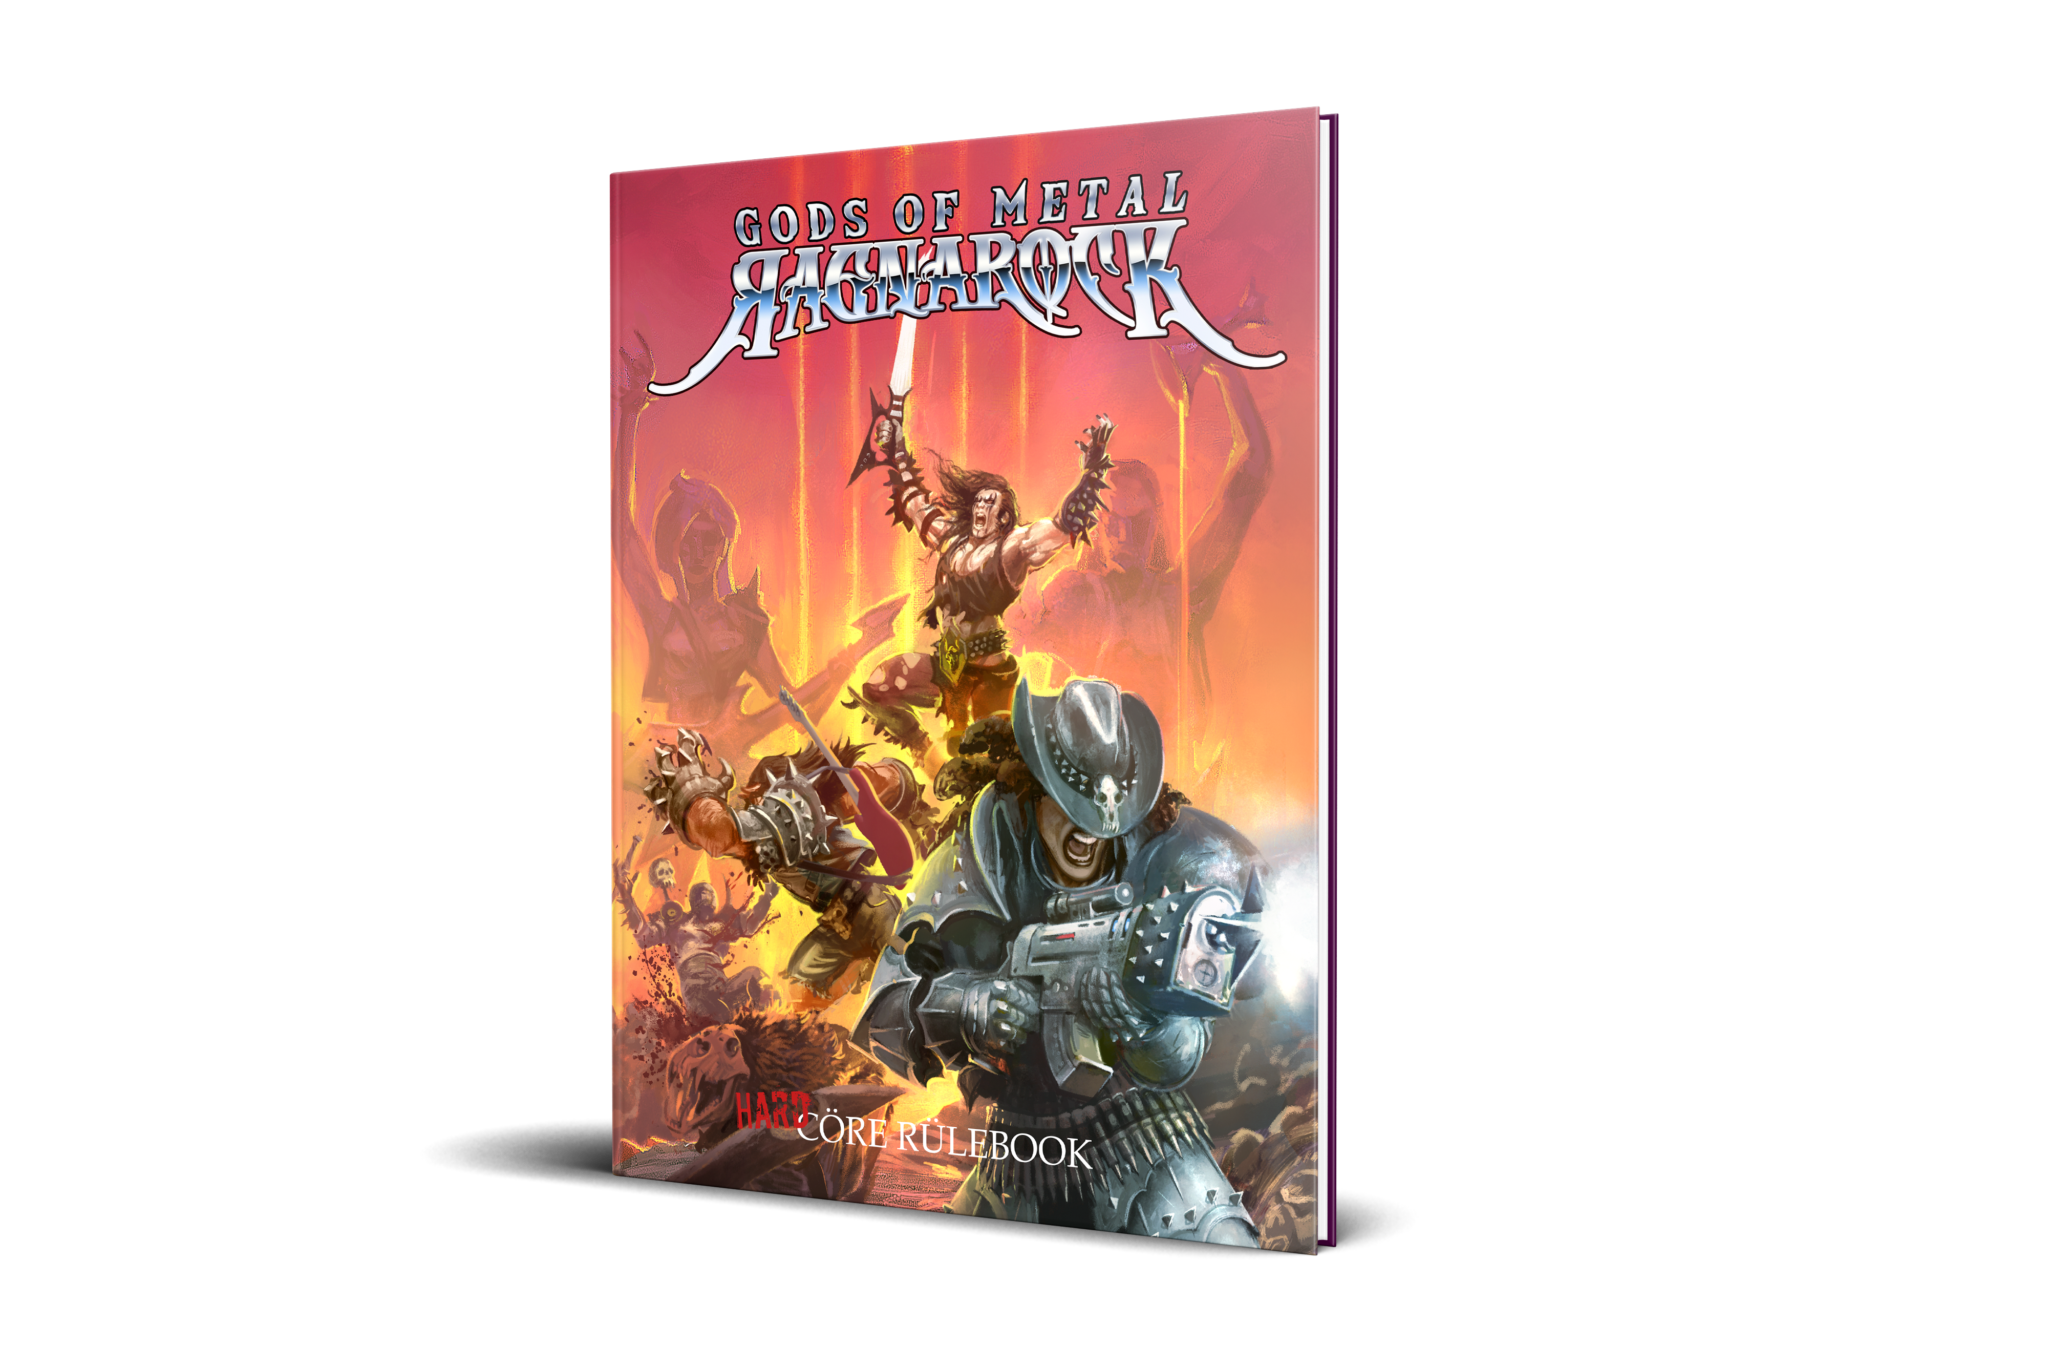 Gods of Metal: Ragnarock book